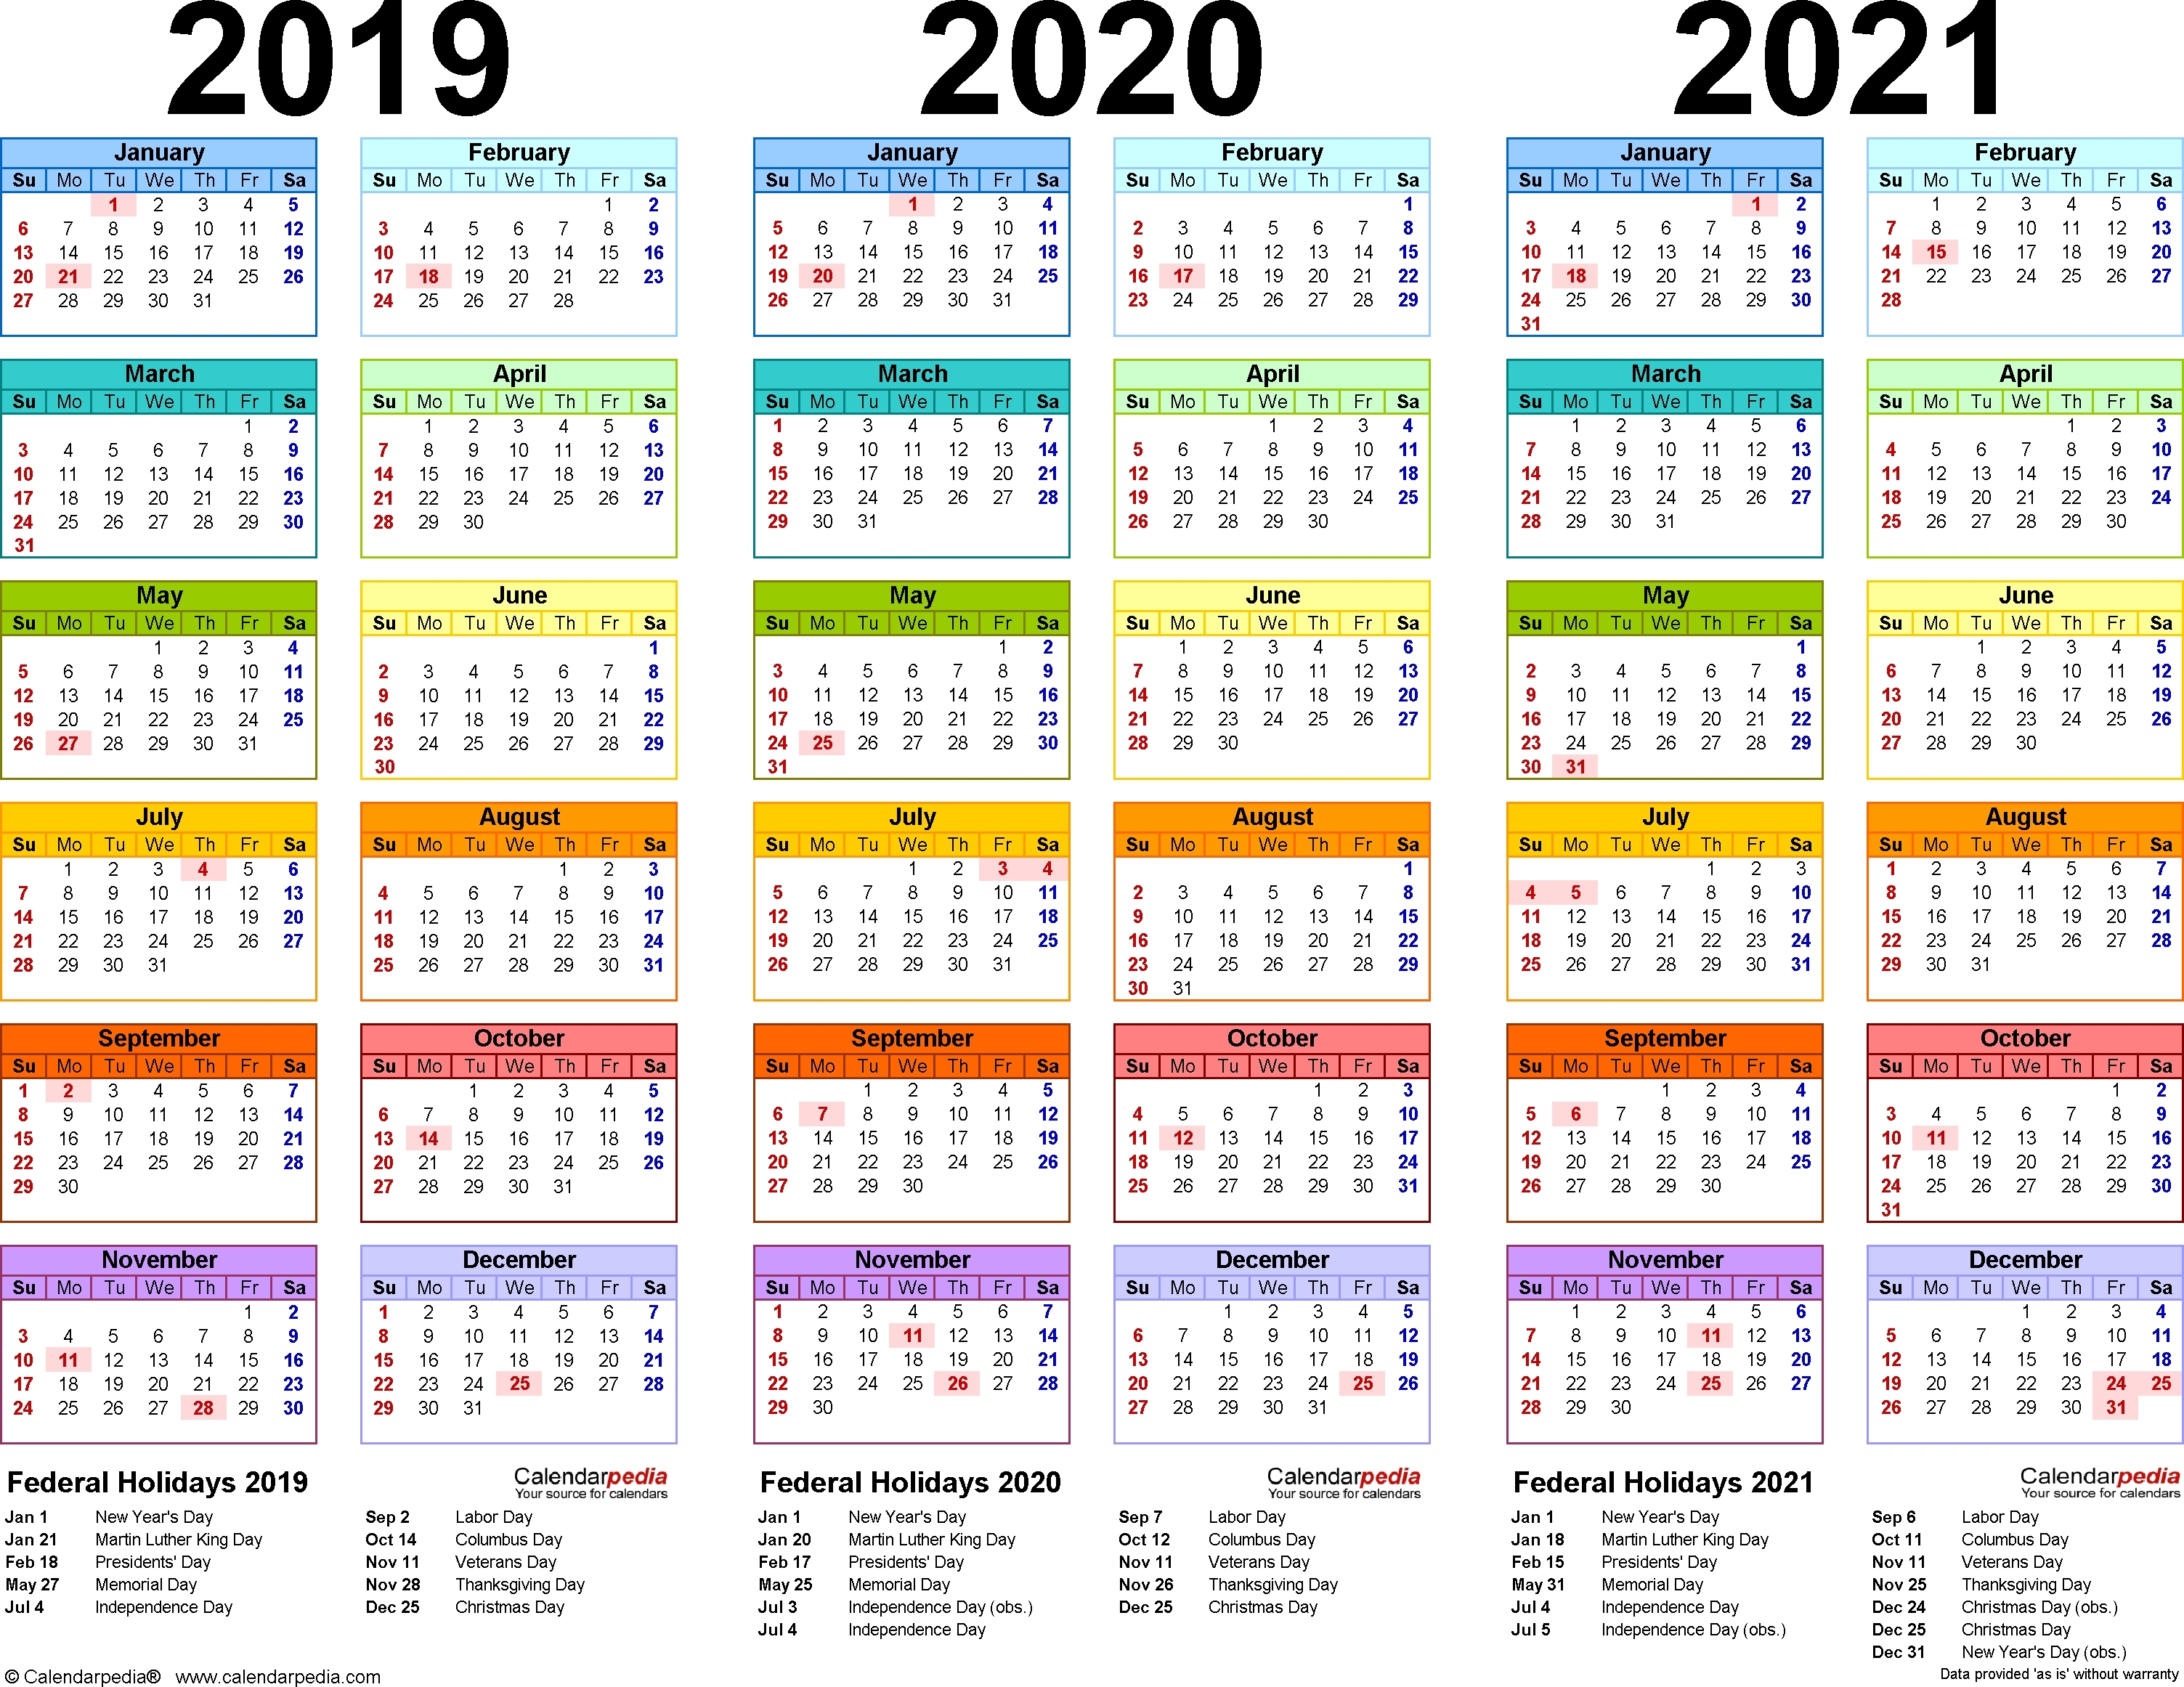 Perky Tamil Calendar 2020 January • Printable Blank Calendar-January 2020 Calendar Muhurtham Dates